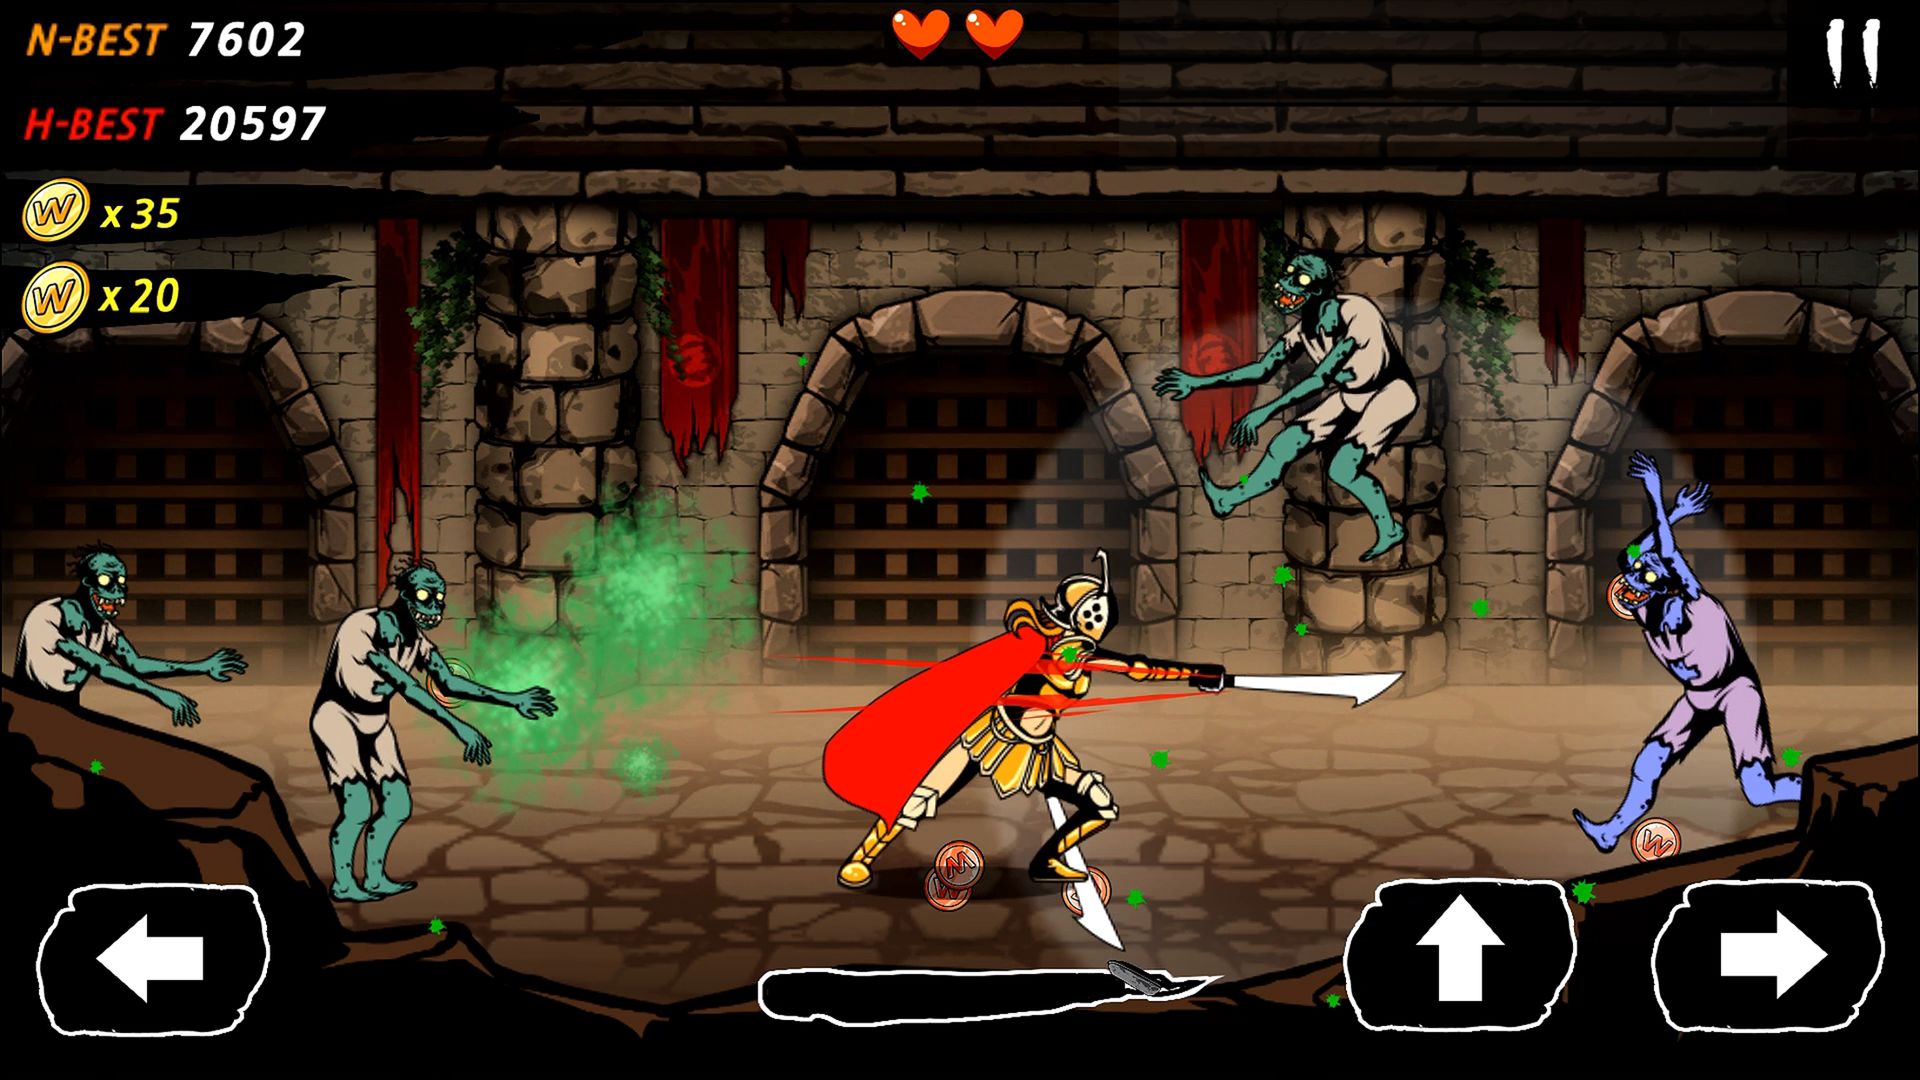 Screenshot of World Of Blade